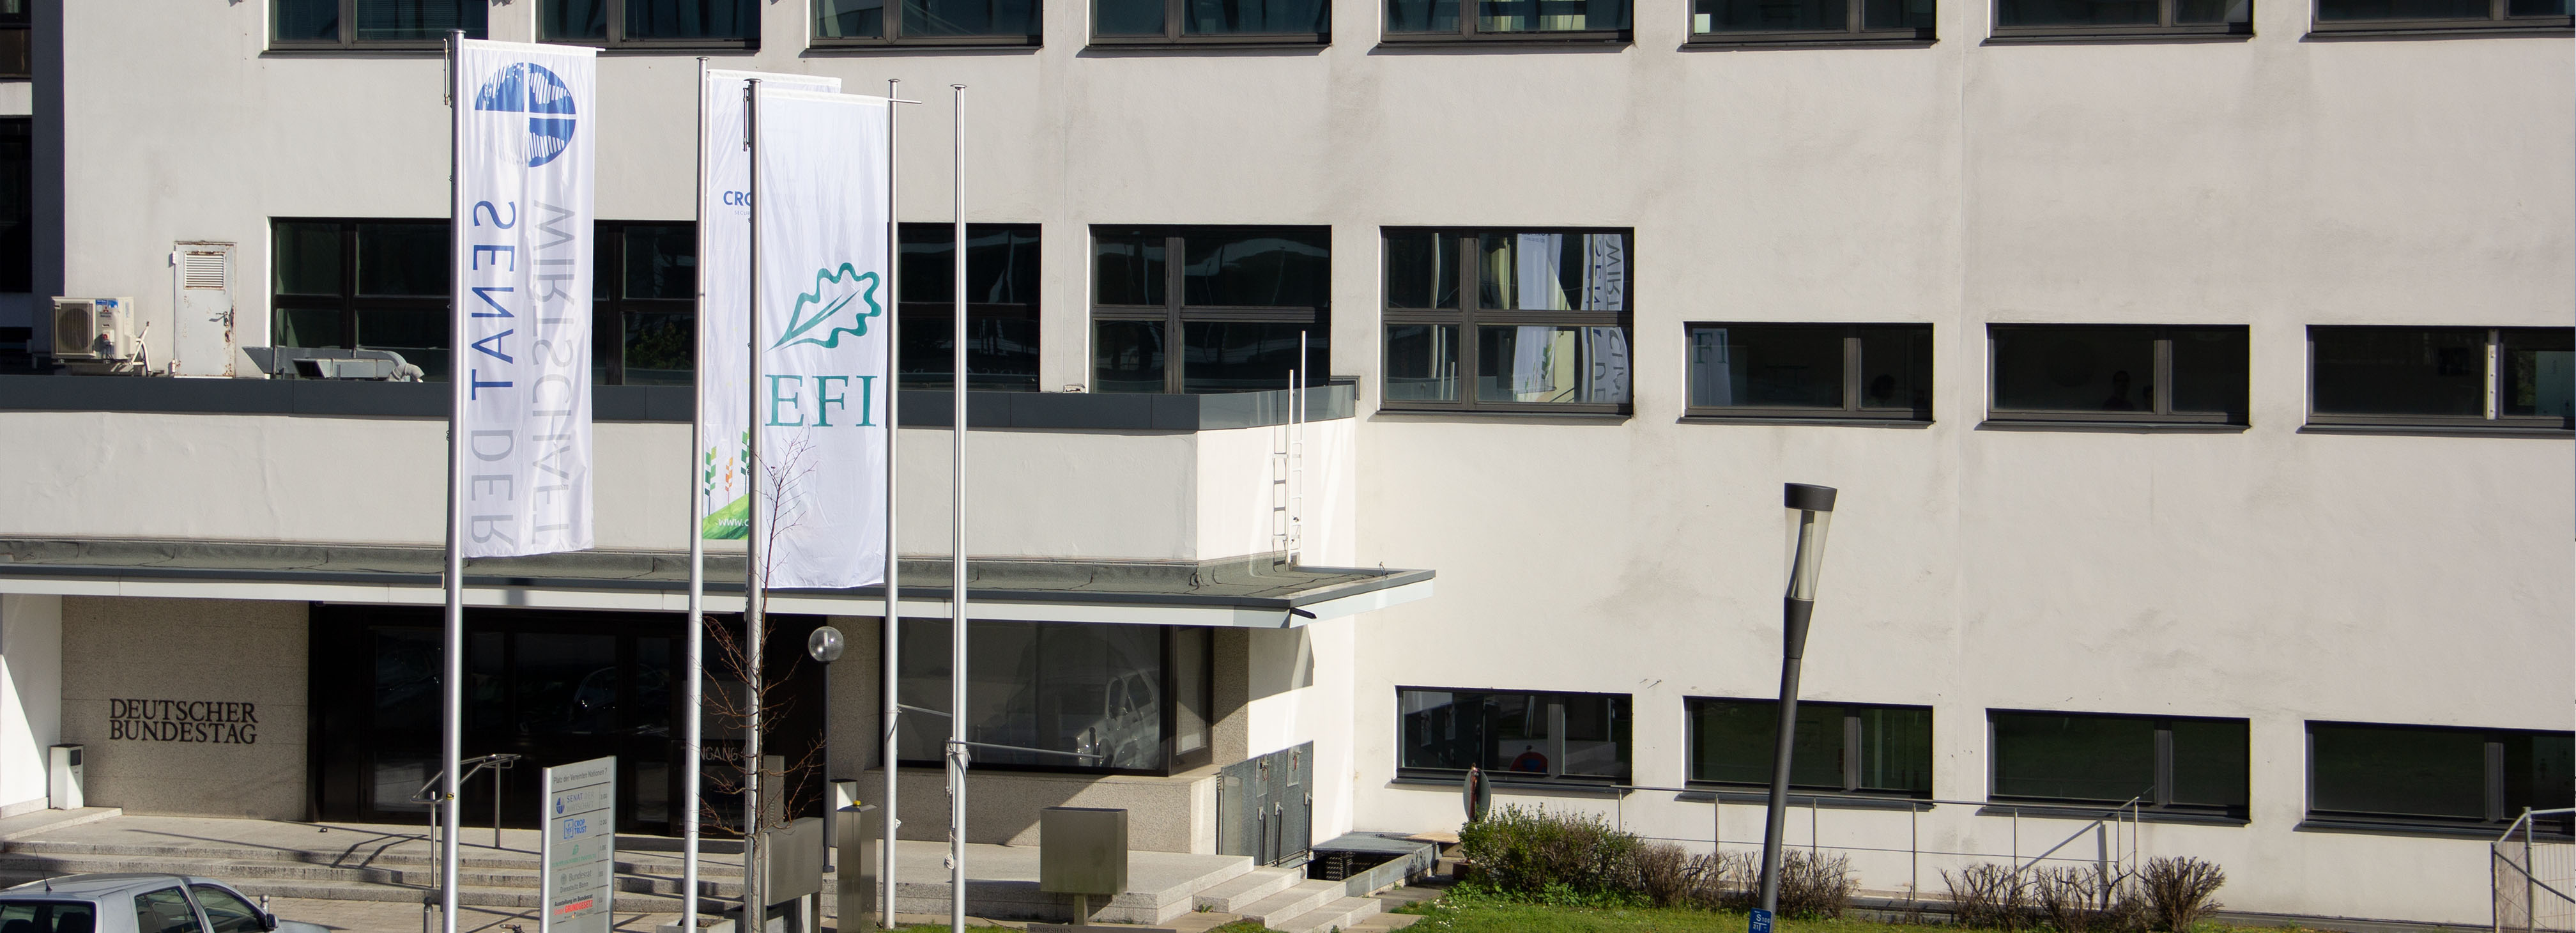 "EFI Bonn Office"